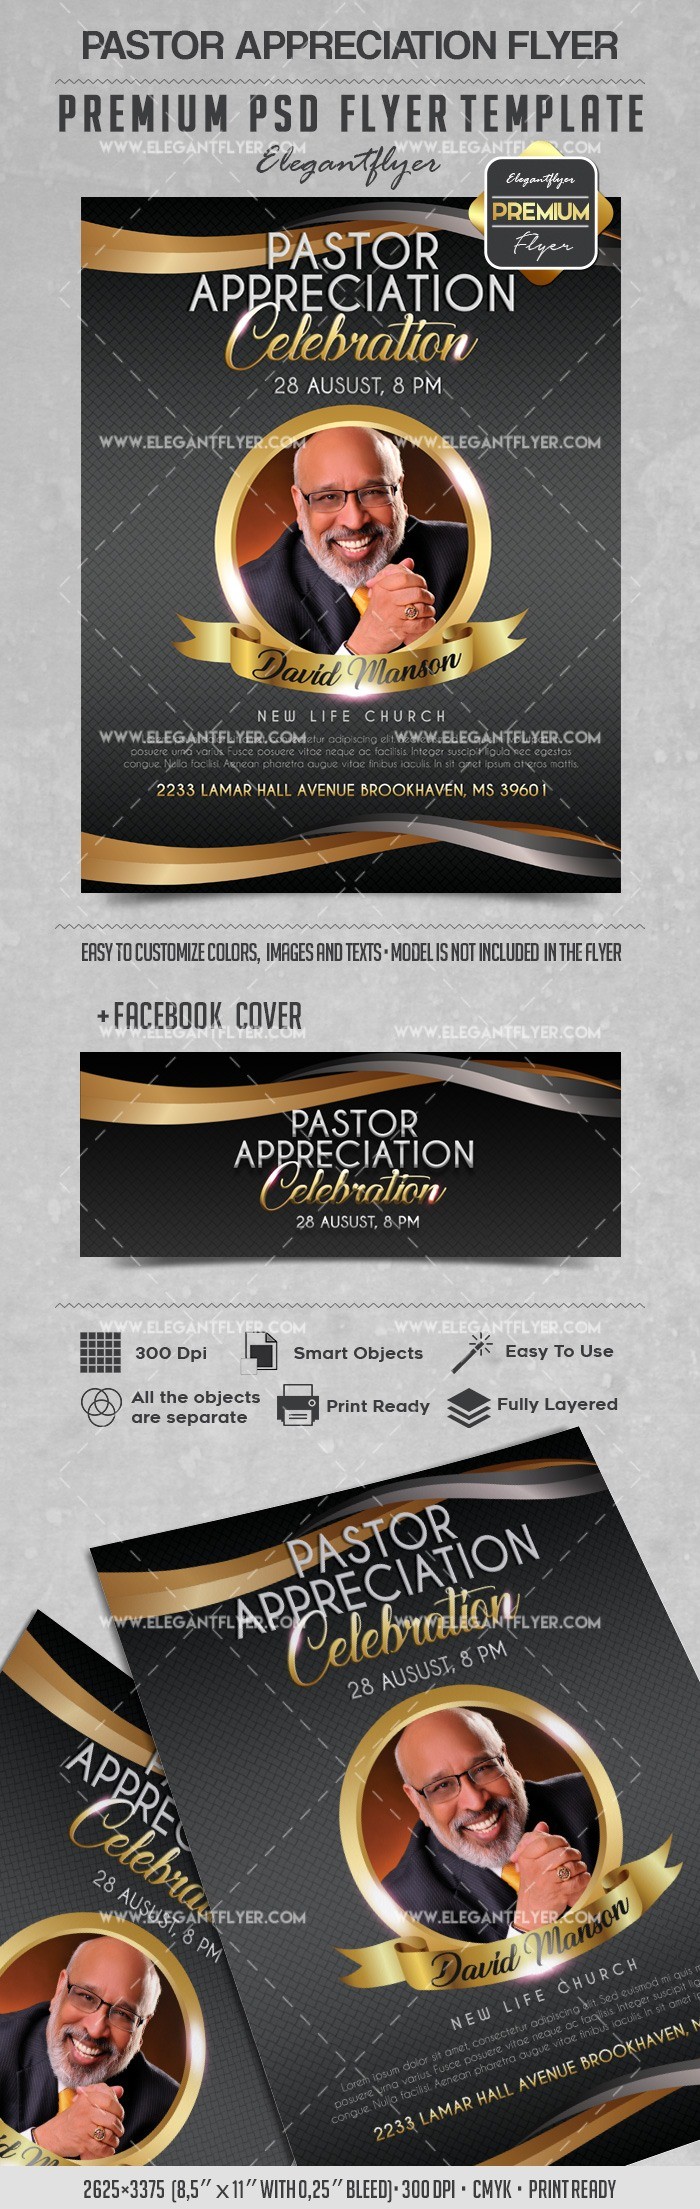 Pastor Appreciation Celebration V1 by ElegantFlyer